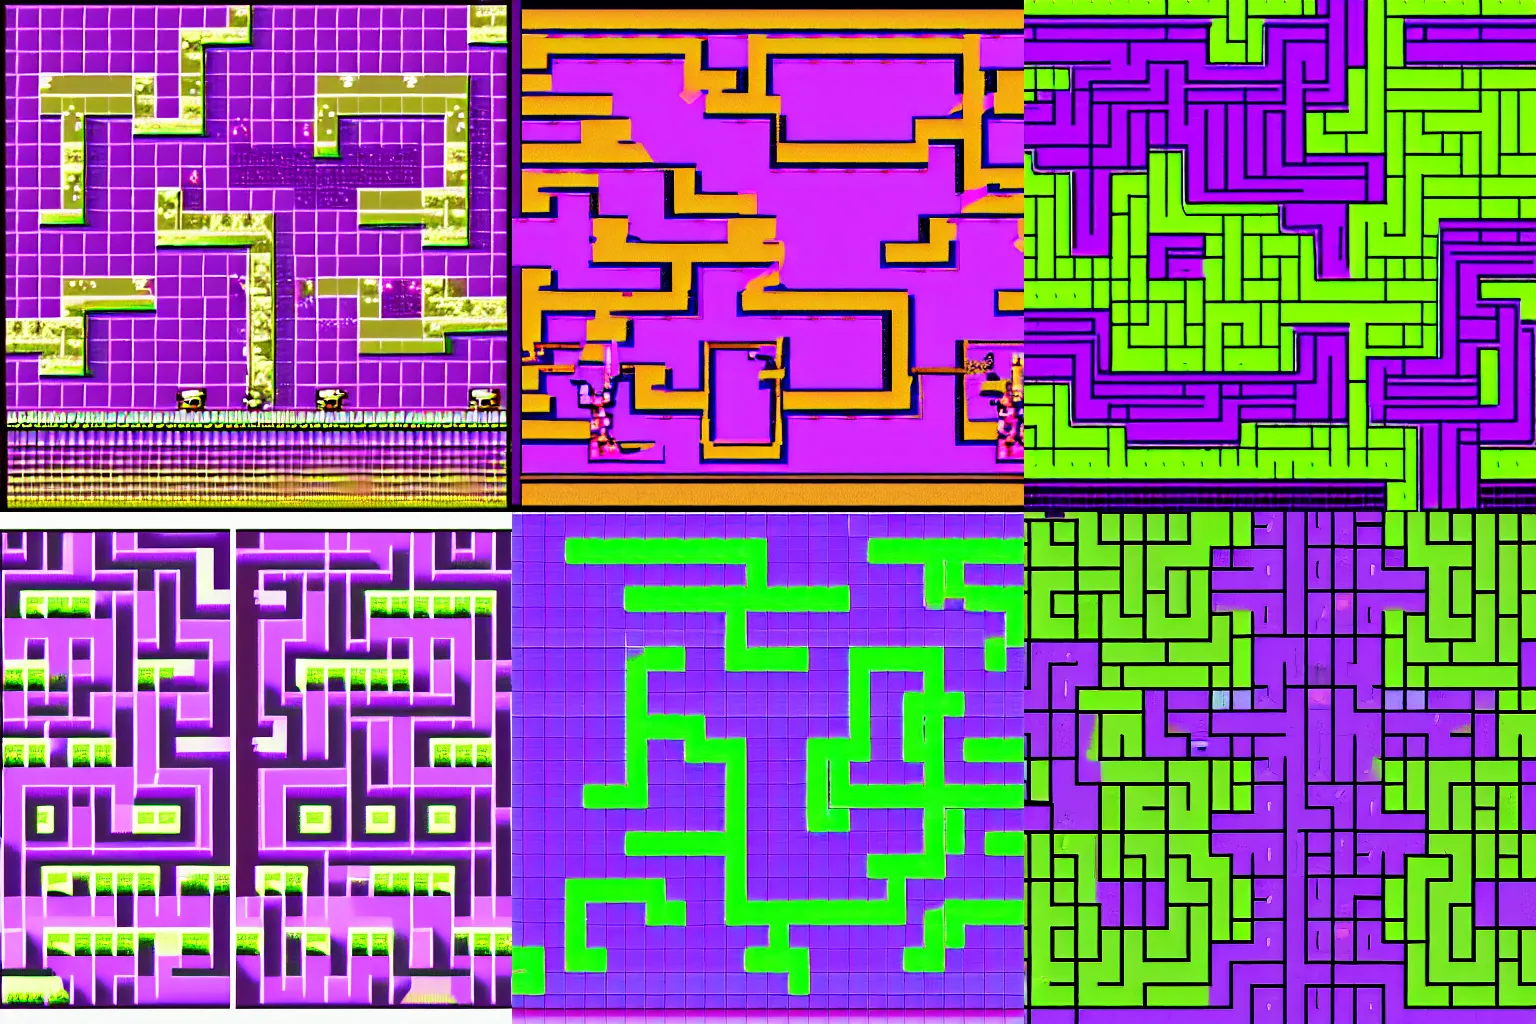 Prompt: purple glitchy maze 8bit video game